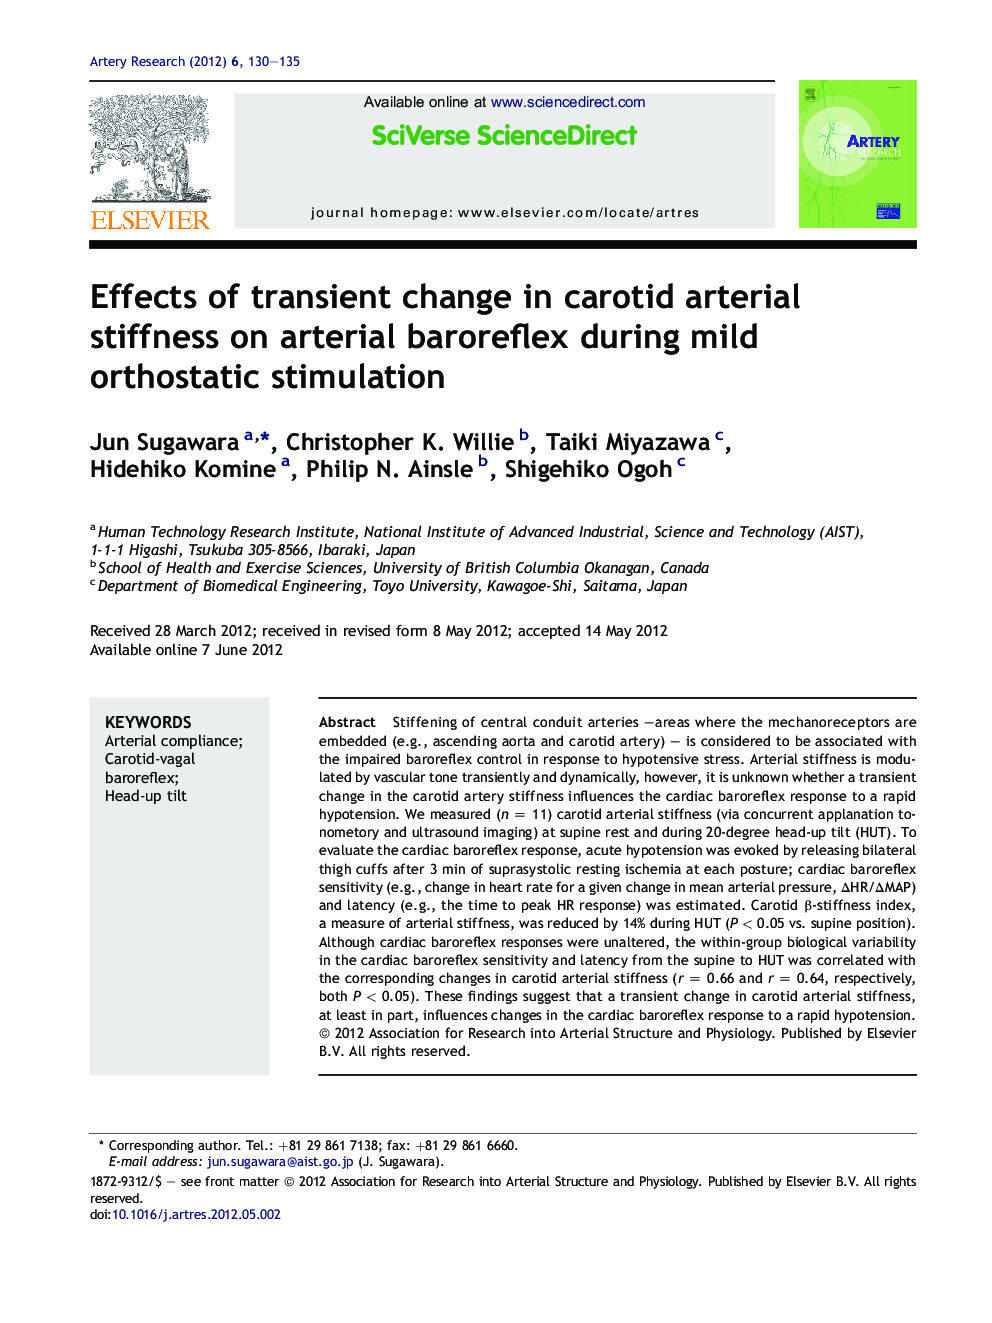 Effects of transient change in carotid arterial stiffness on arterial baroreflex during mild orthostatic stimulation